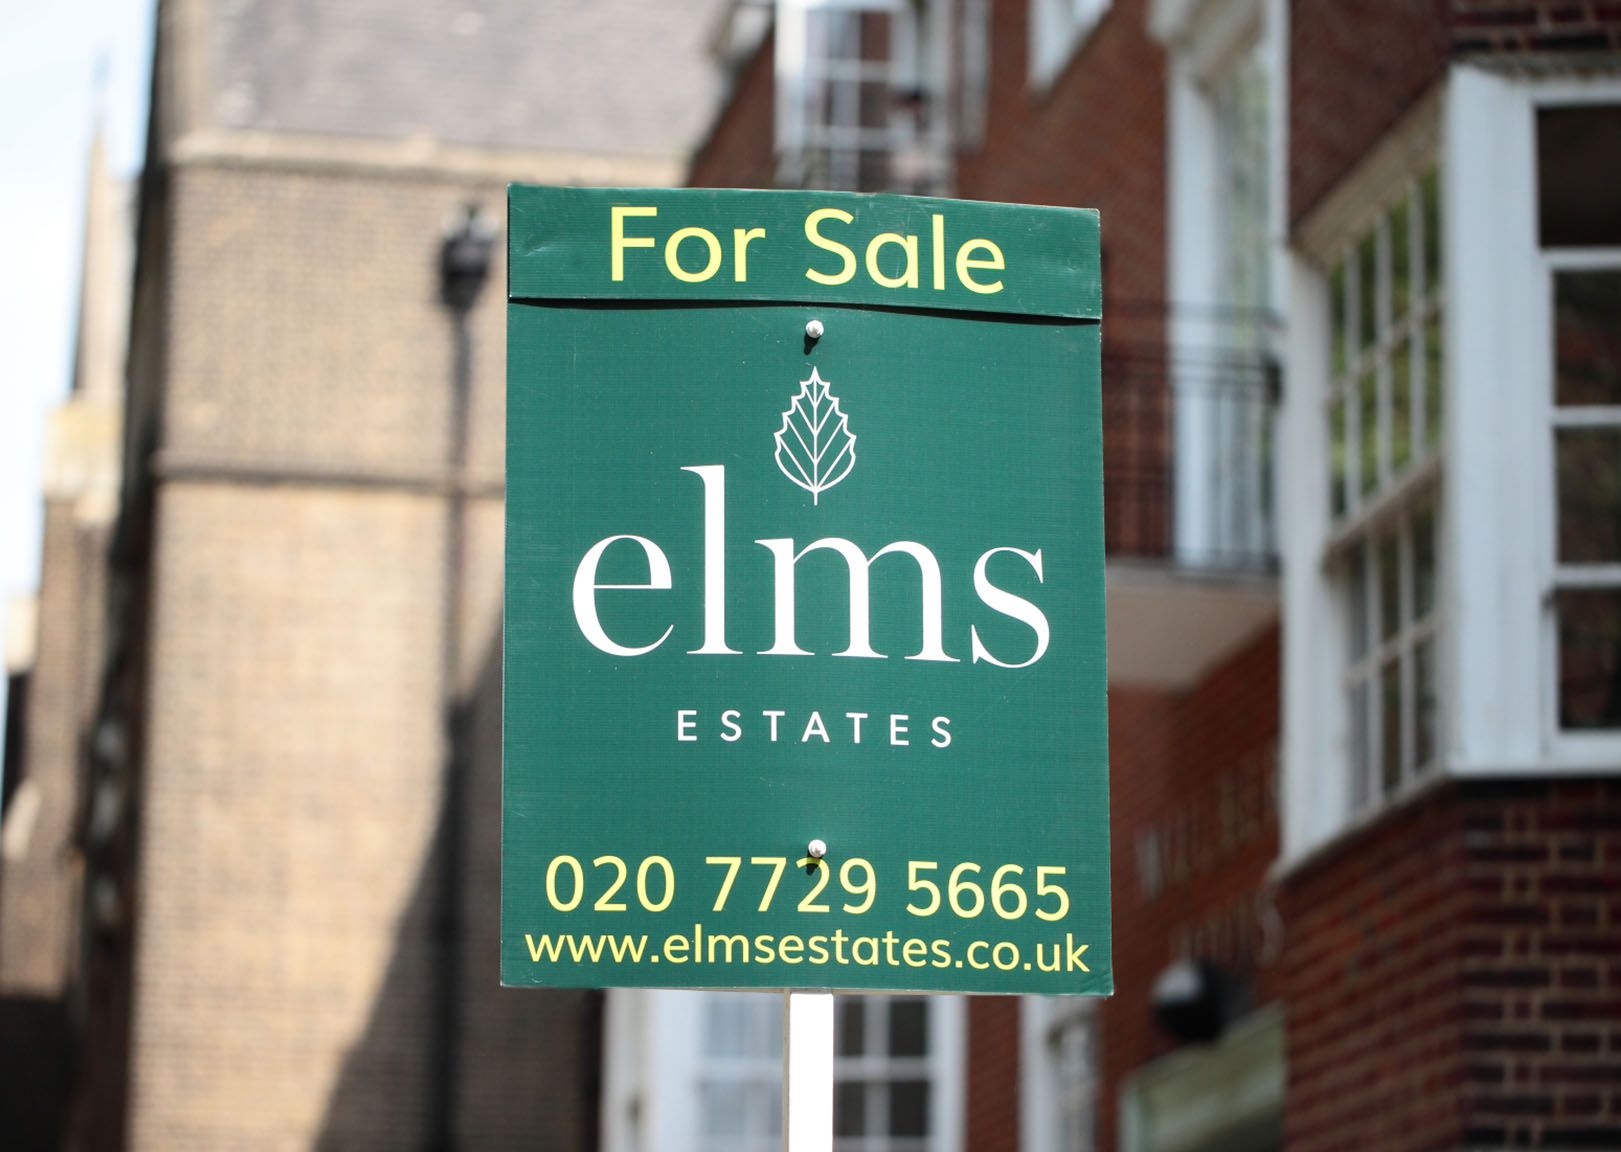 Property Sales - Elms Estates